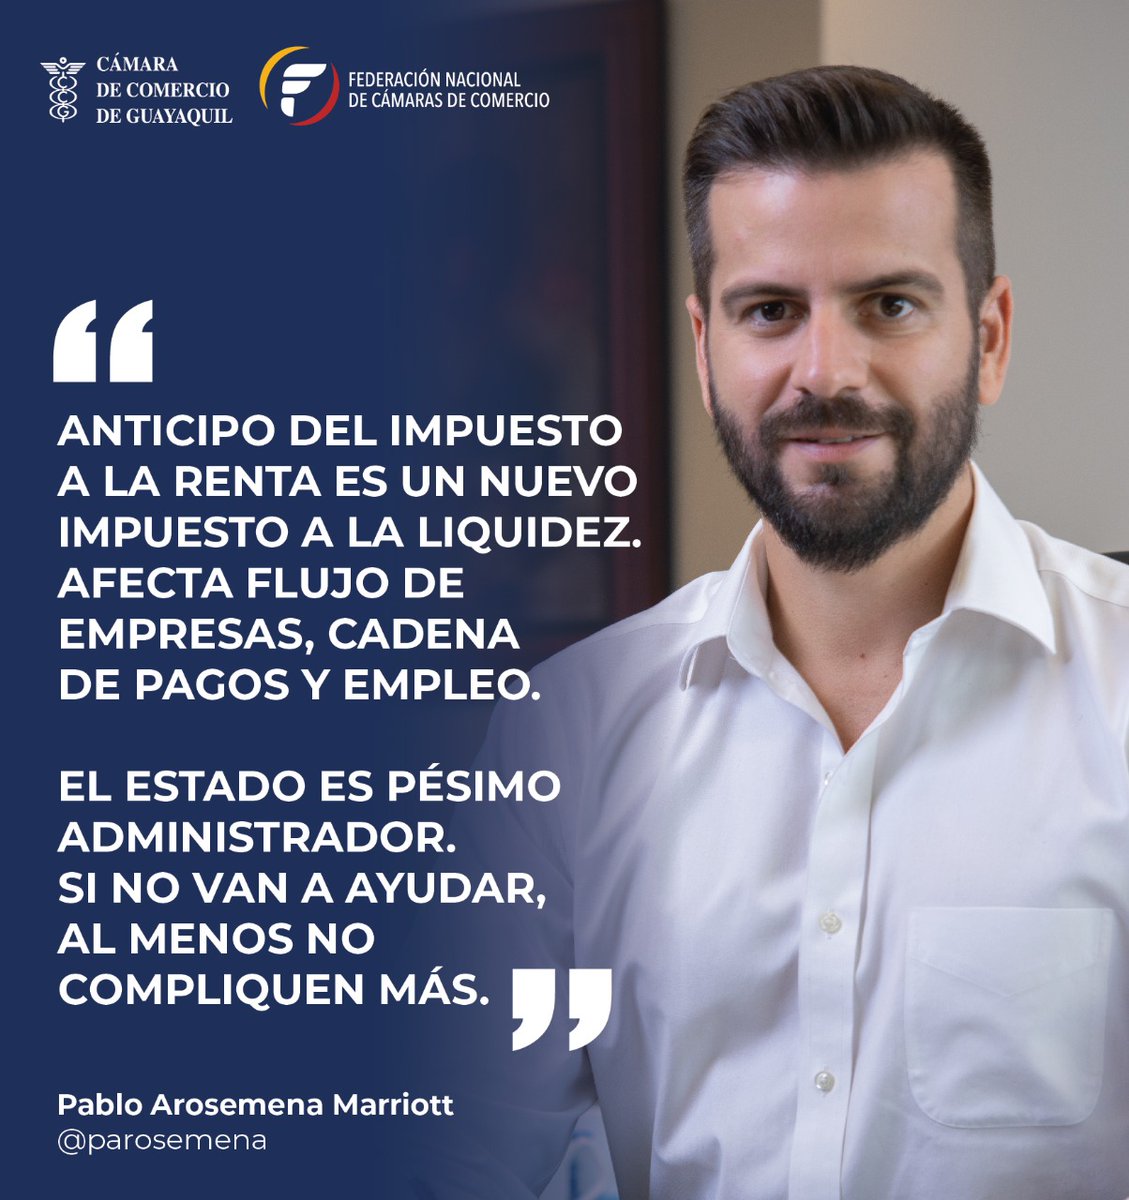 Peladura calidad tifón Pablo Arosemena Marriott on Twitter: "Con la liquidez no se juega.  https://t.co/OgGX5jKkai" / Twitter